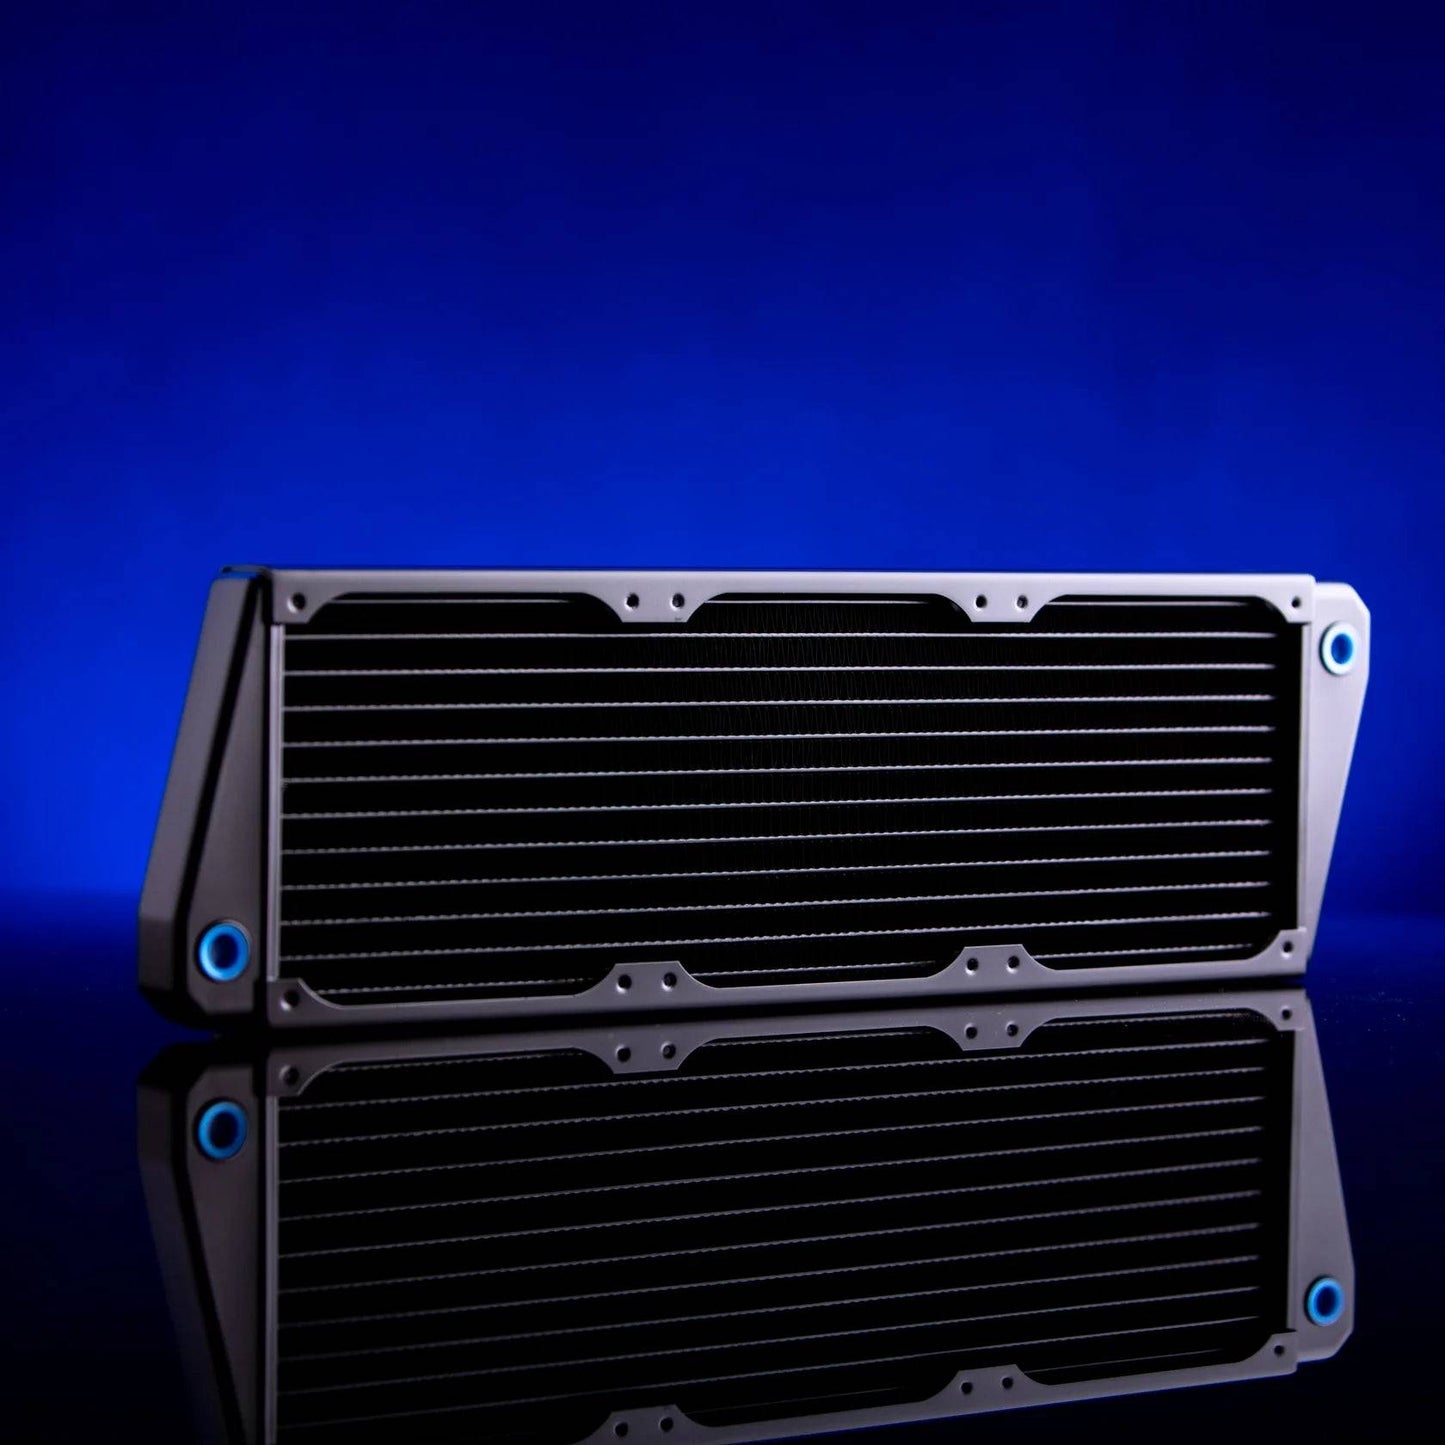 Alphacool NexXxoS ST30 Full Copper X-Flow 360mm radiator Ordinary Cooling Gear